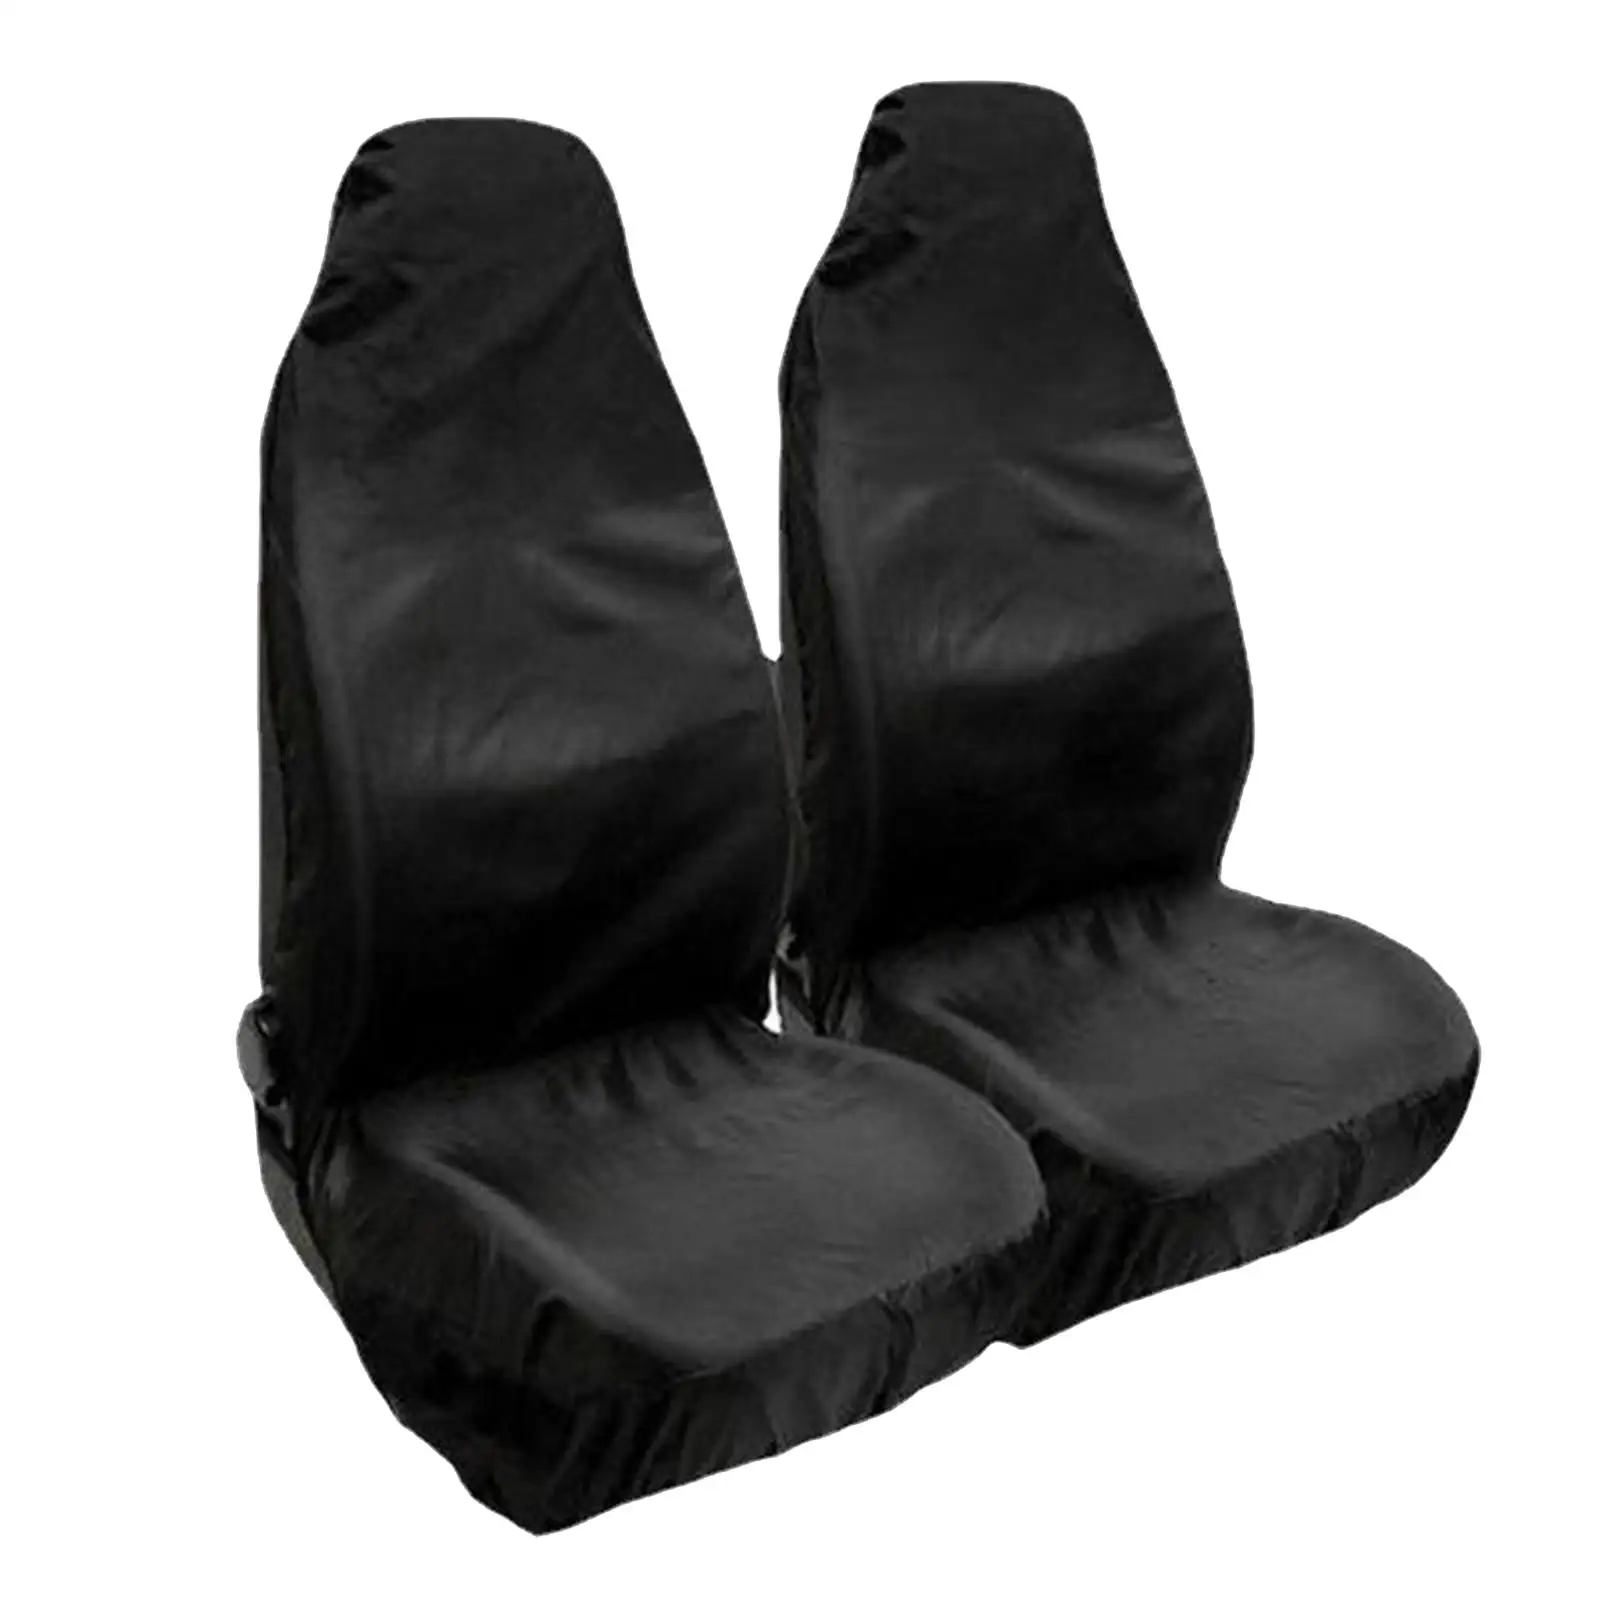 2Pcs Seat Cover Set Foldable Seat Cushion Cover for Trucks Cars SUV